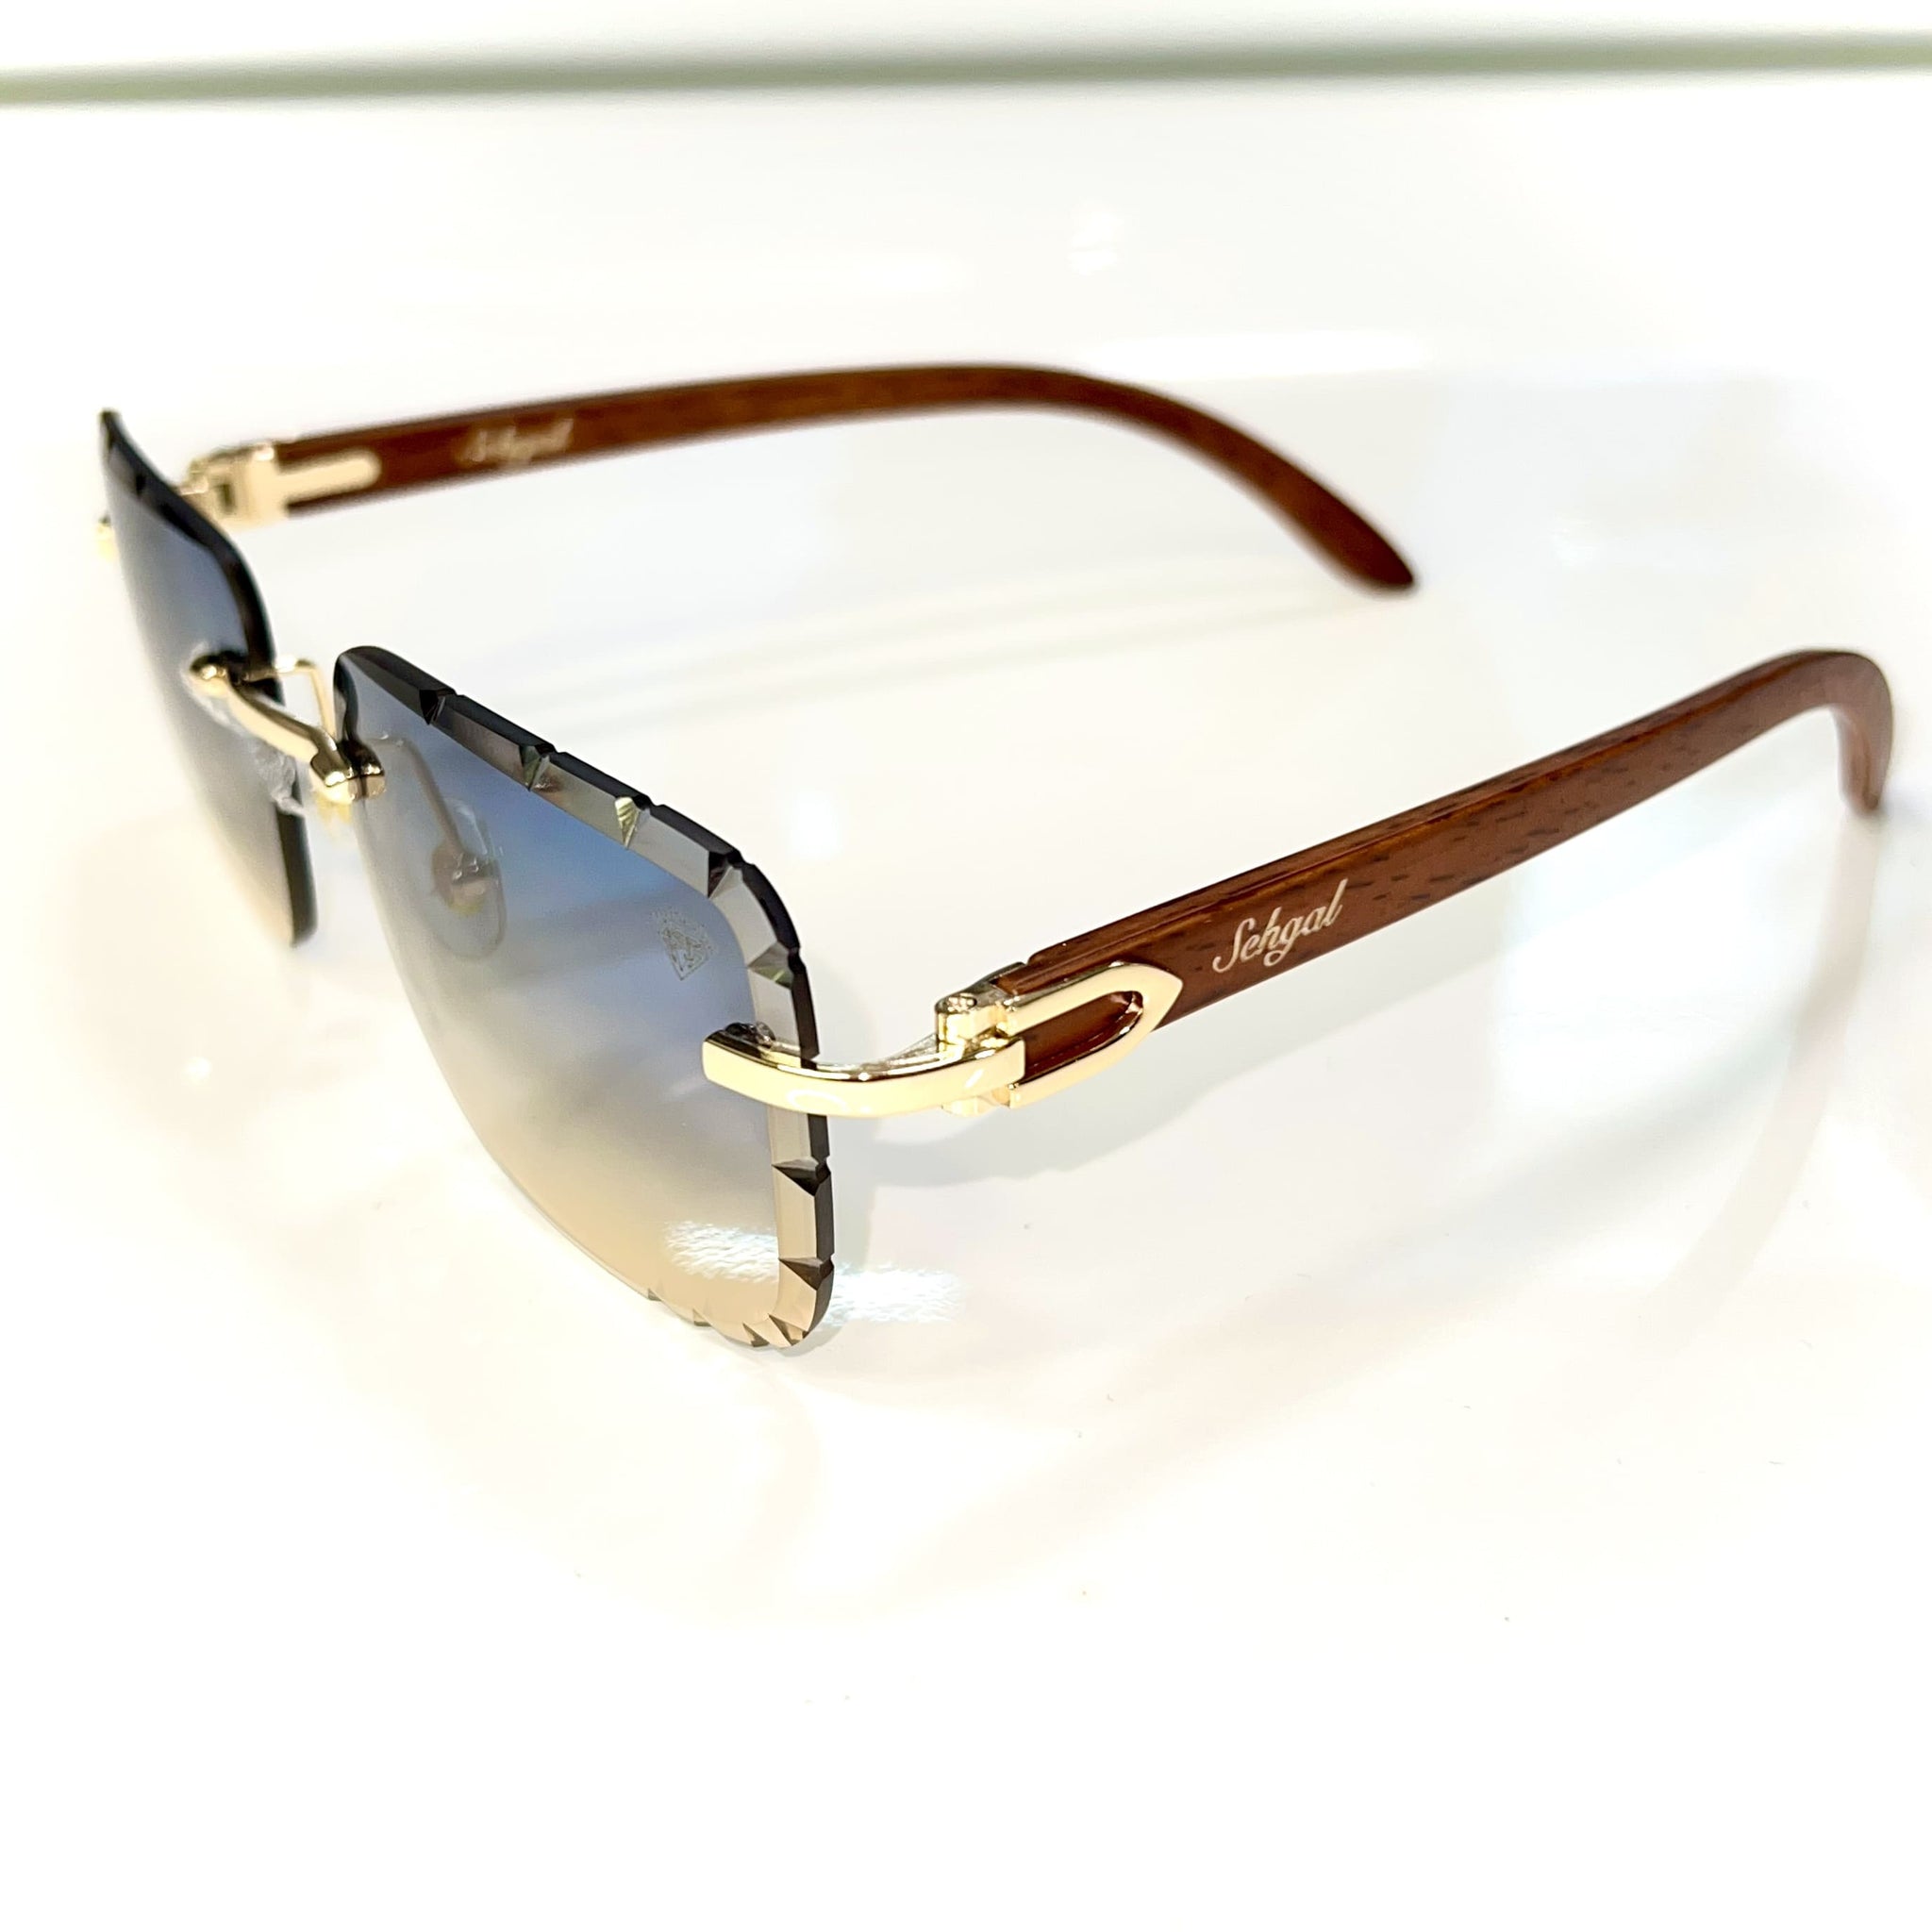 Woodcut 2.0 Glasses - Diamond cut / 14 carat gold plated / Woodgrain side - Blue Shade - Sehgal Glasses